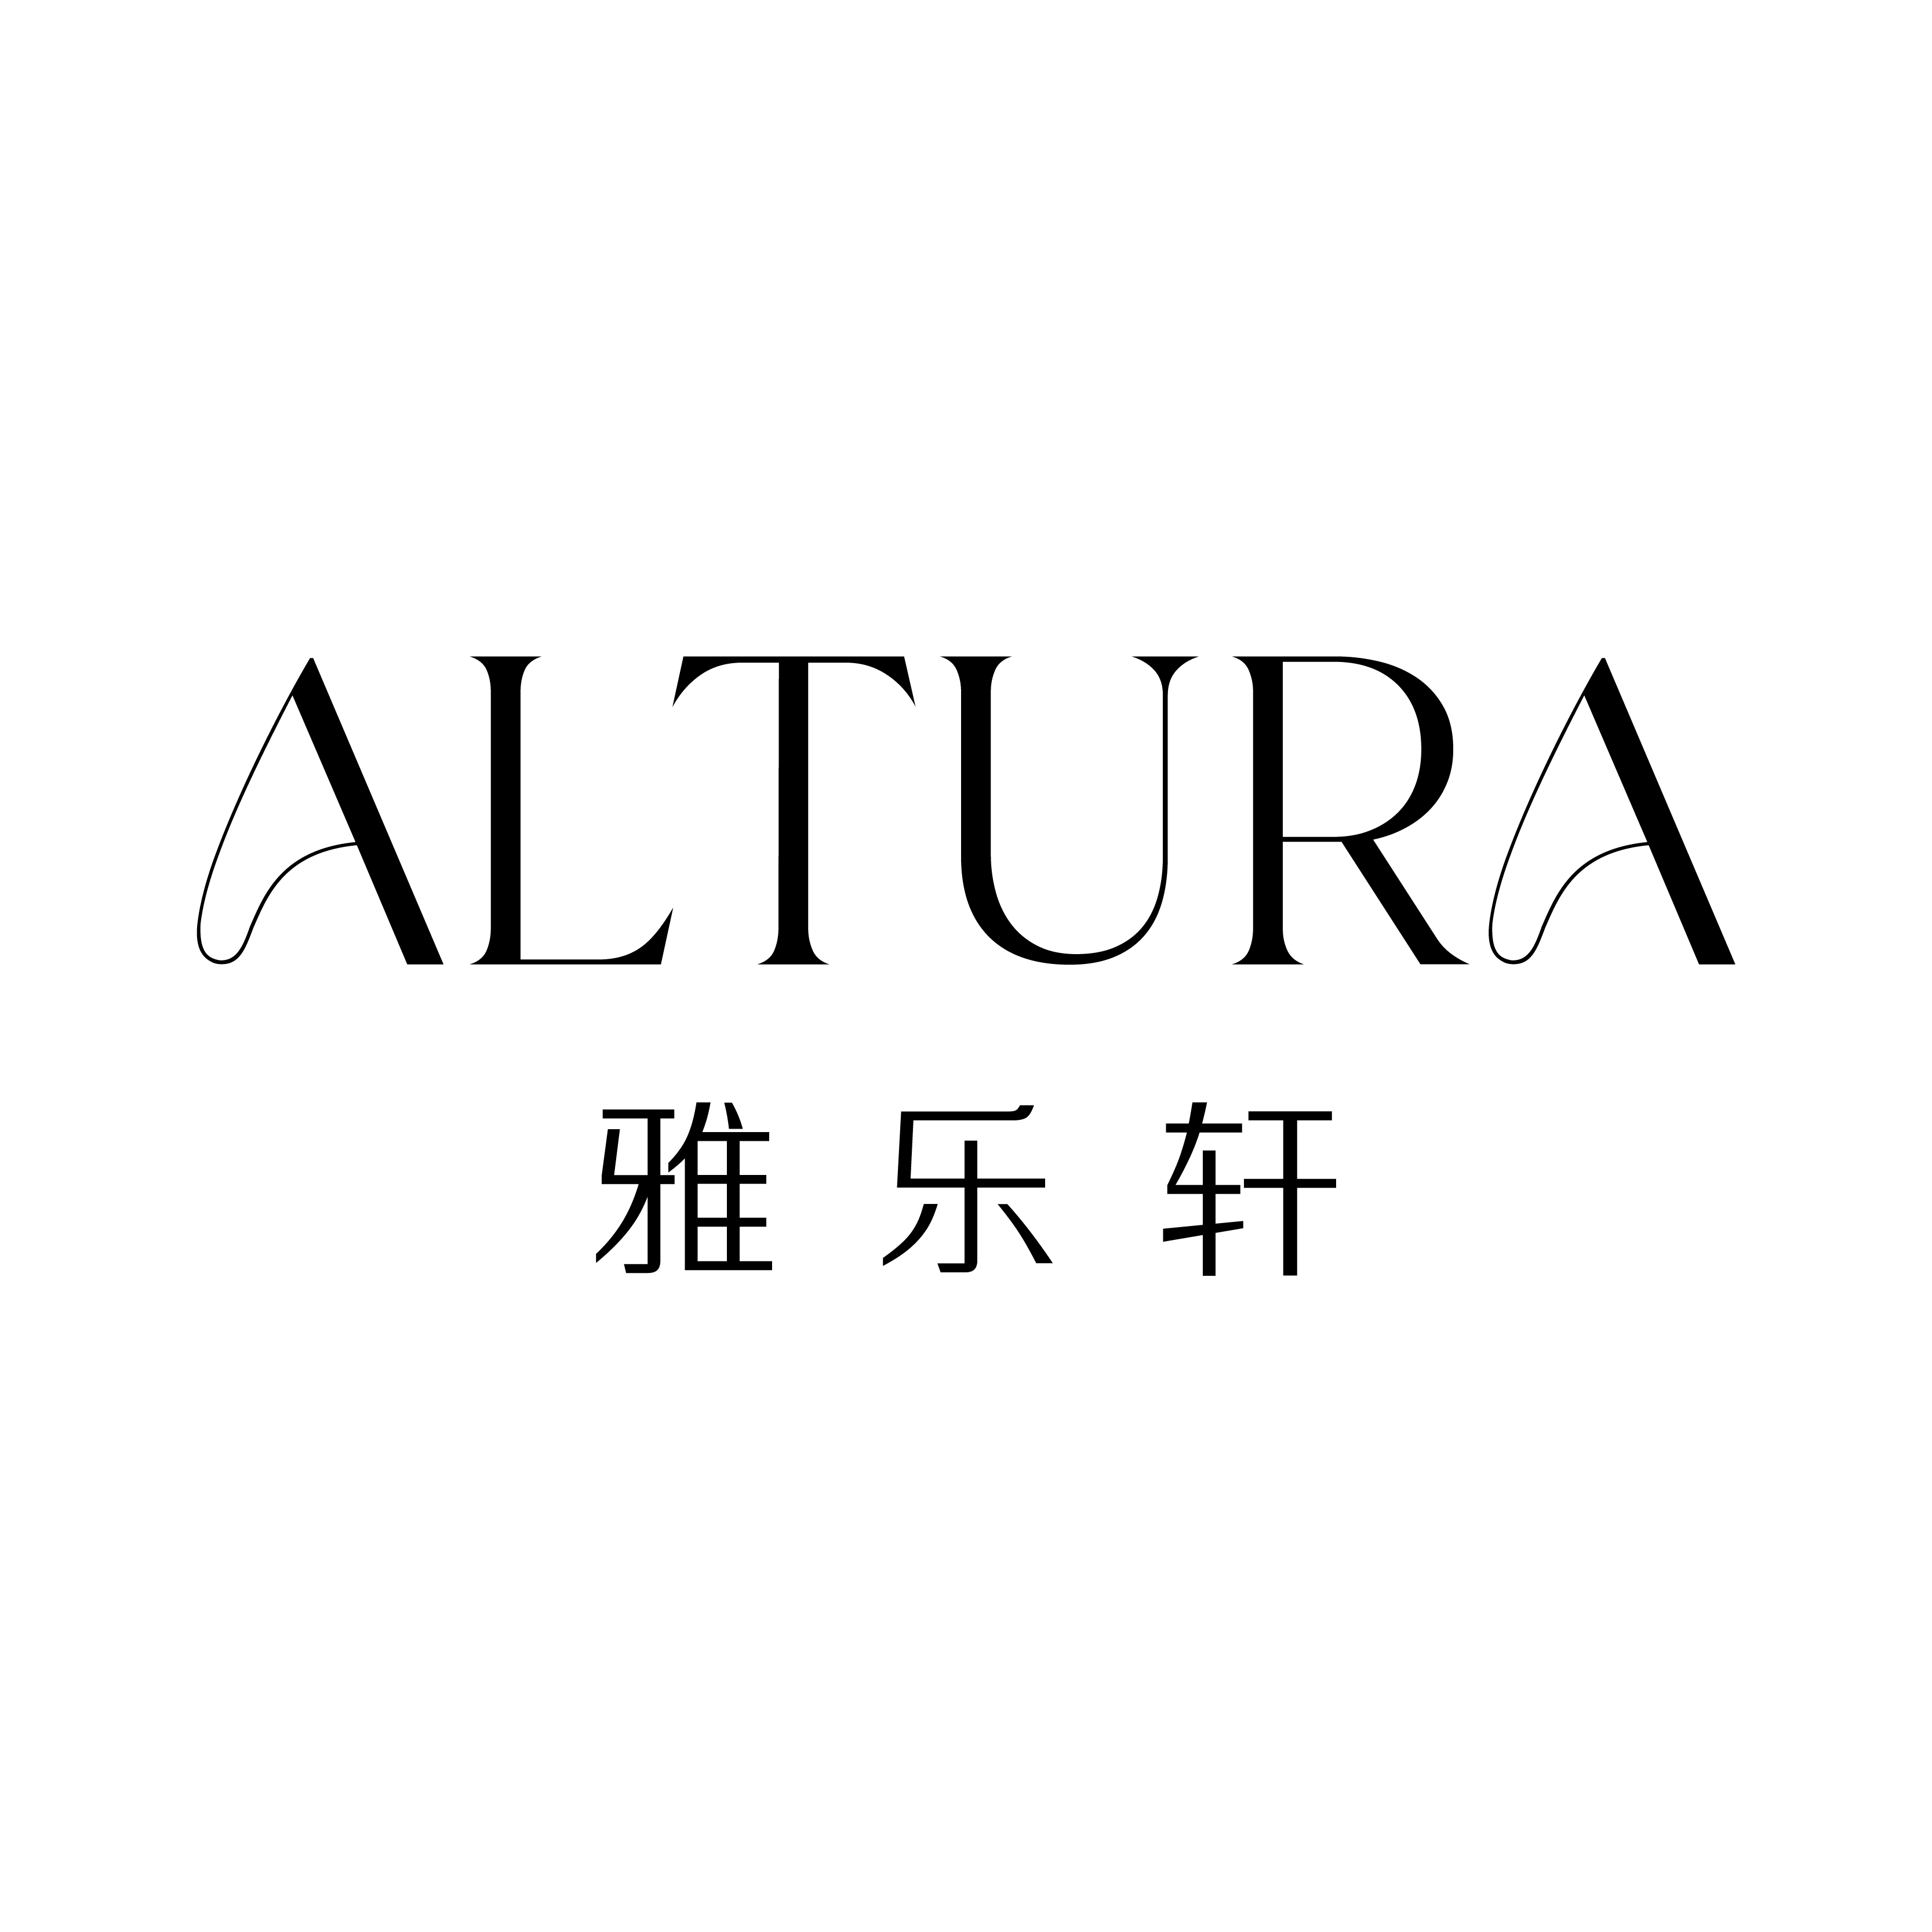 Altura 雅乐轩 image